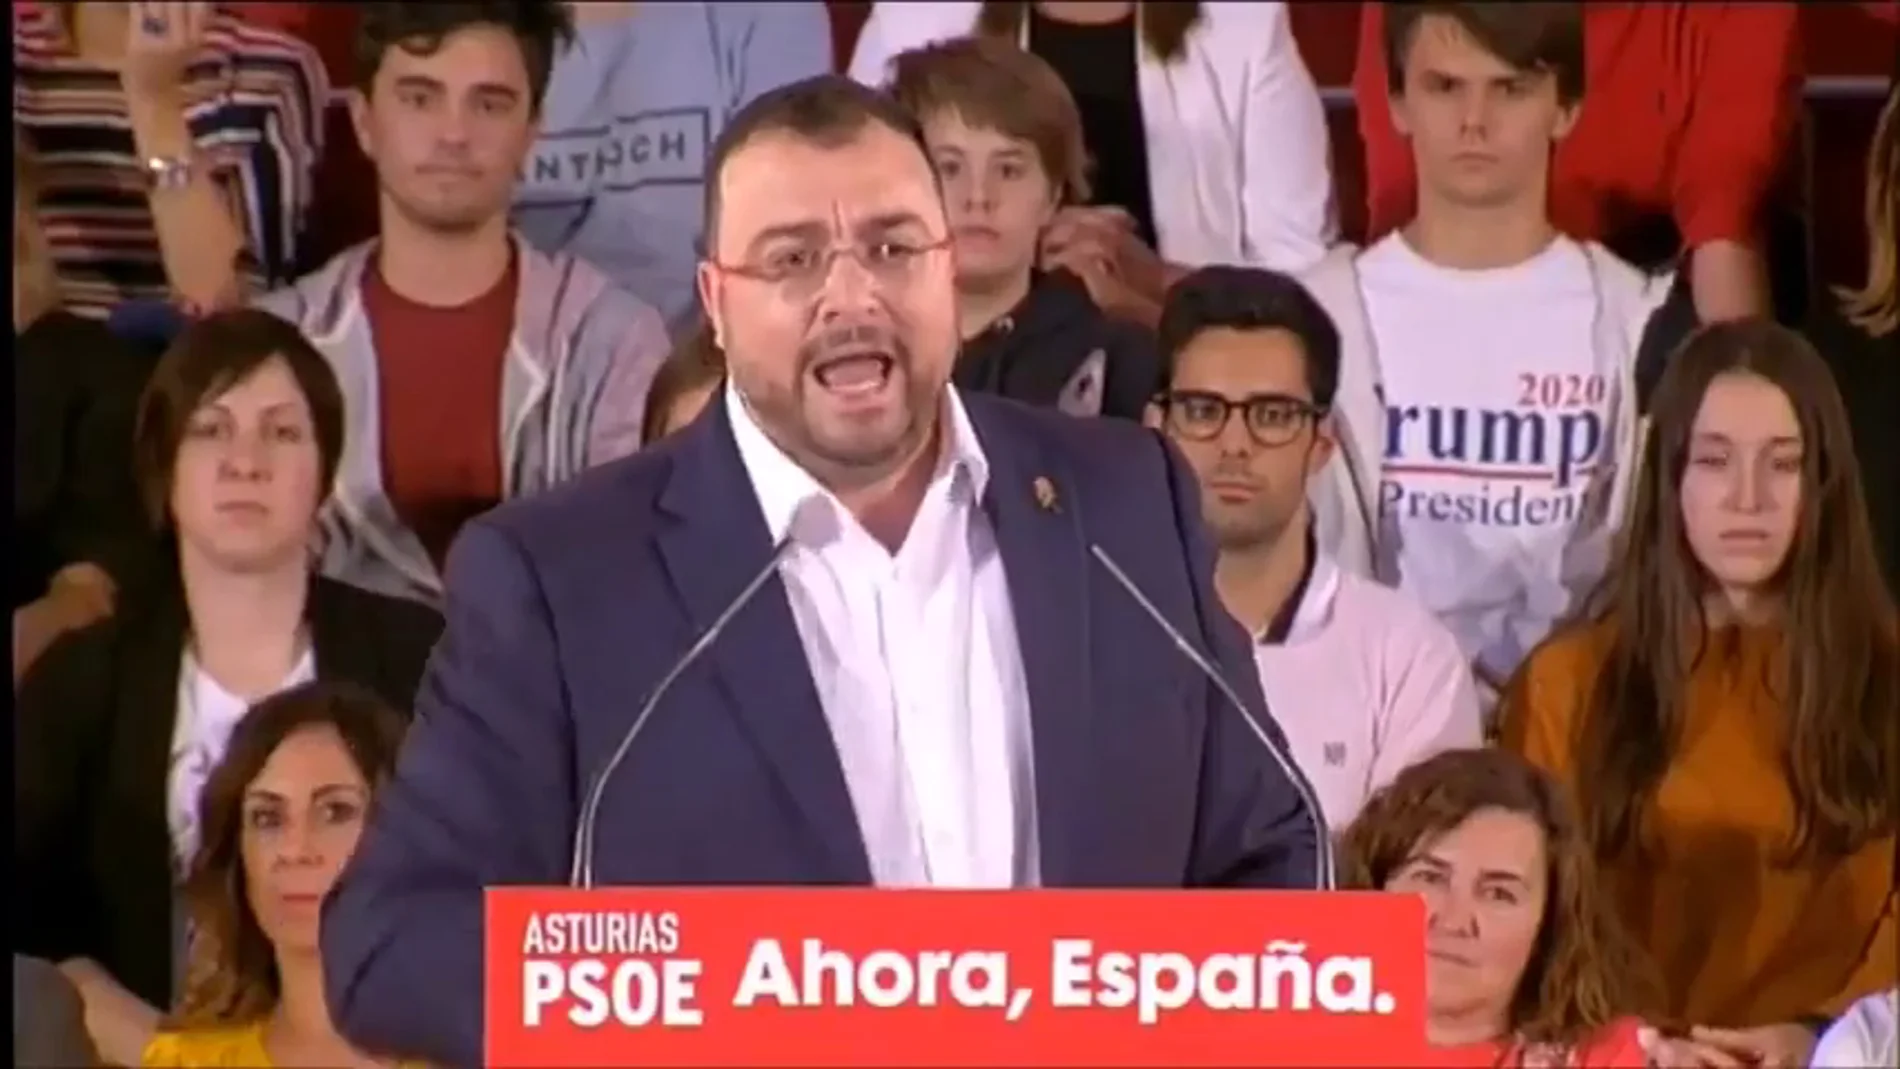 Un joven 'cuela' en un mitin del PSOE una camiseta a favor de Donald Trump